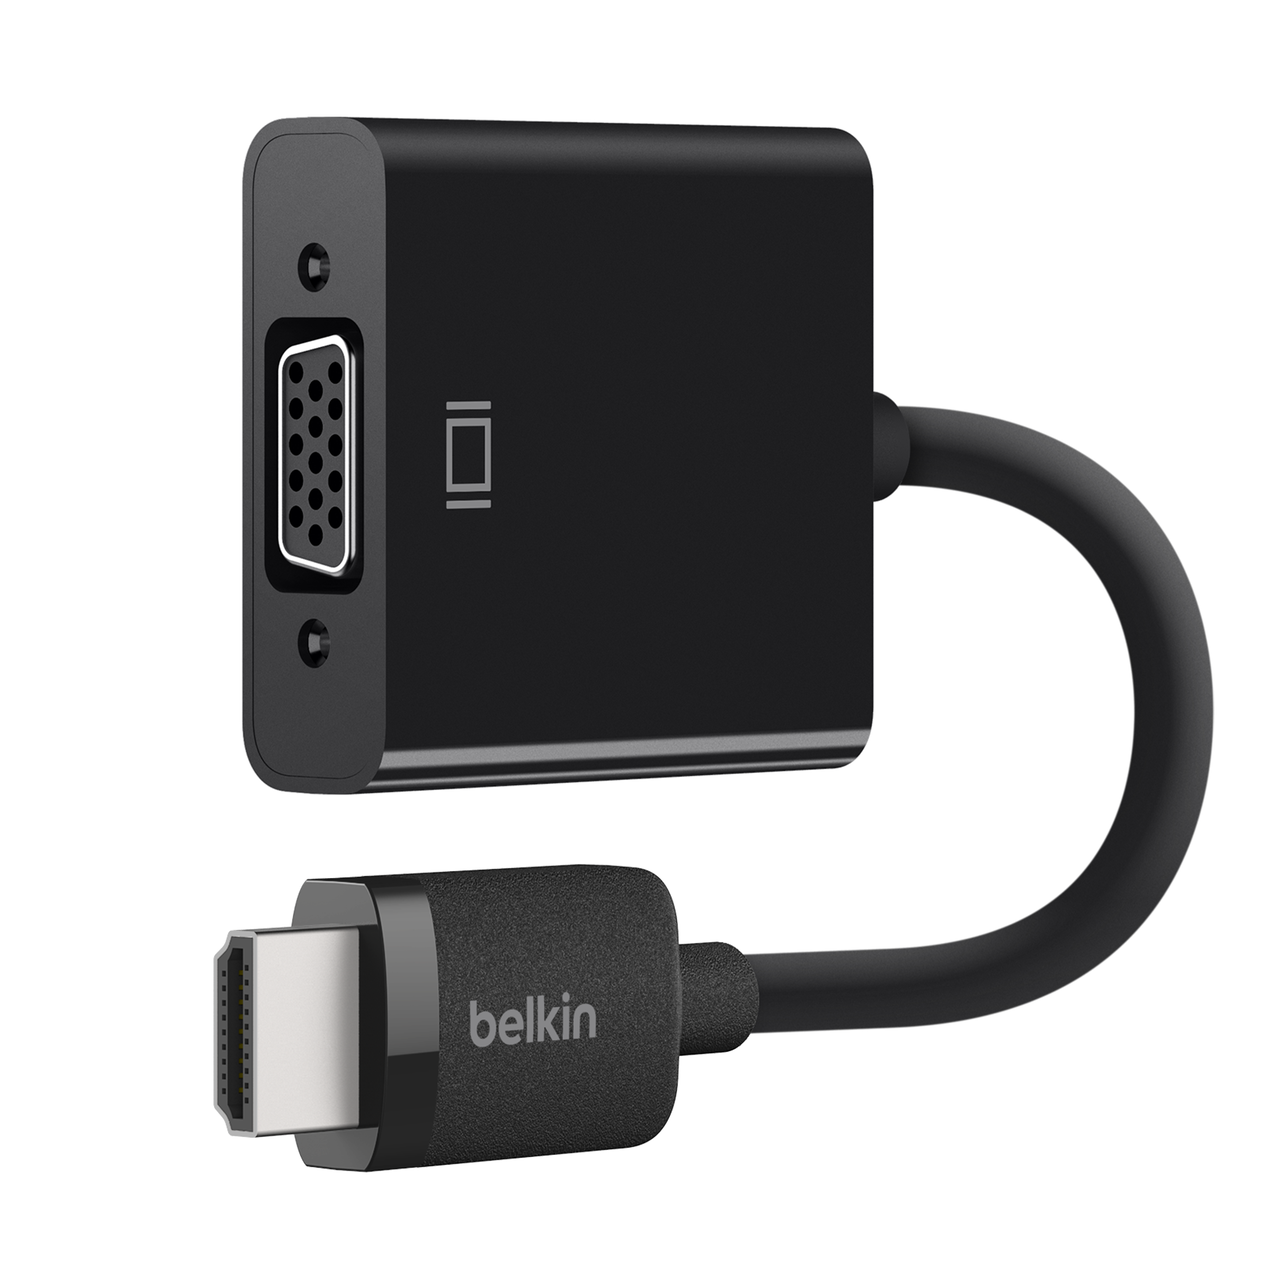 debat vegetarisch Refrein Belkin HDMI� to VGA Adapter with Micro-USB Power | Belkin: US